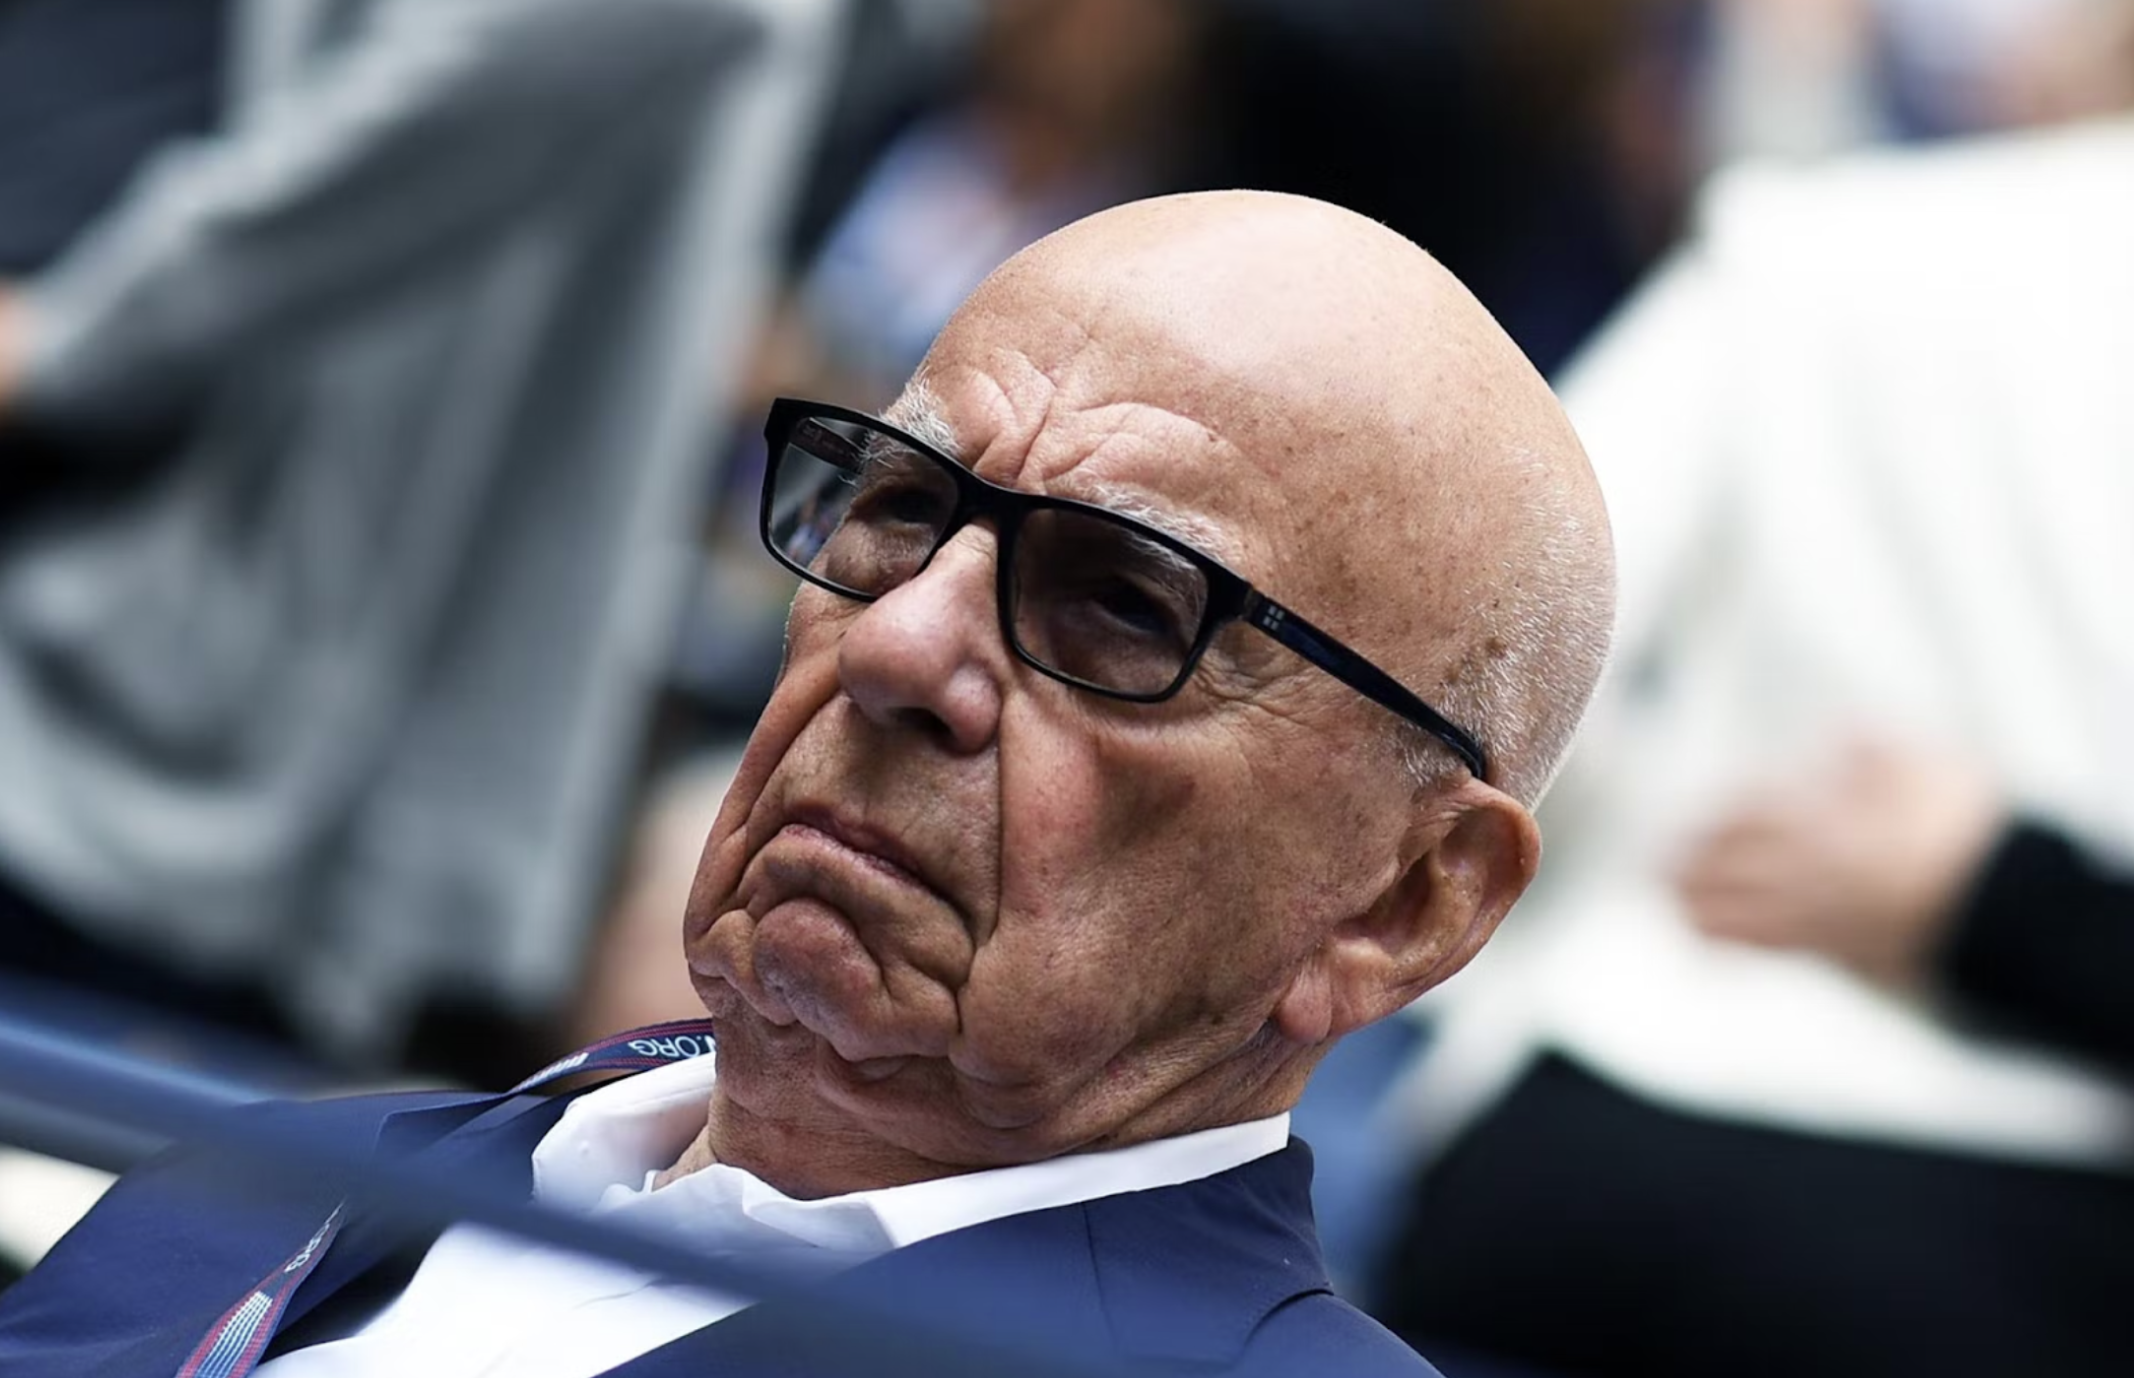 Rupert Murdoch Keeps His House in Order